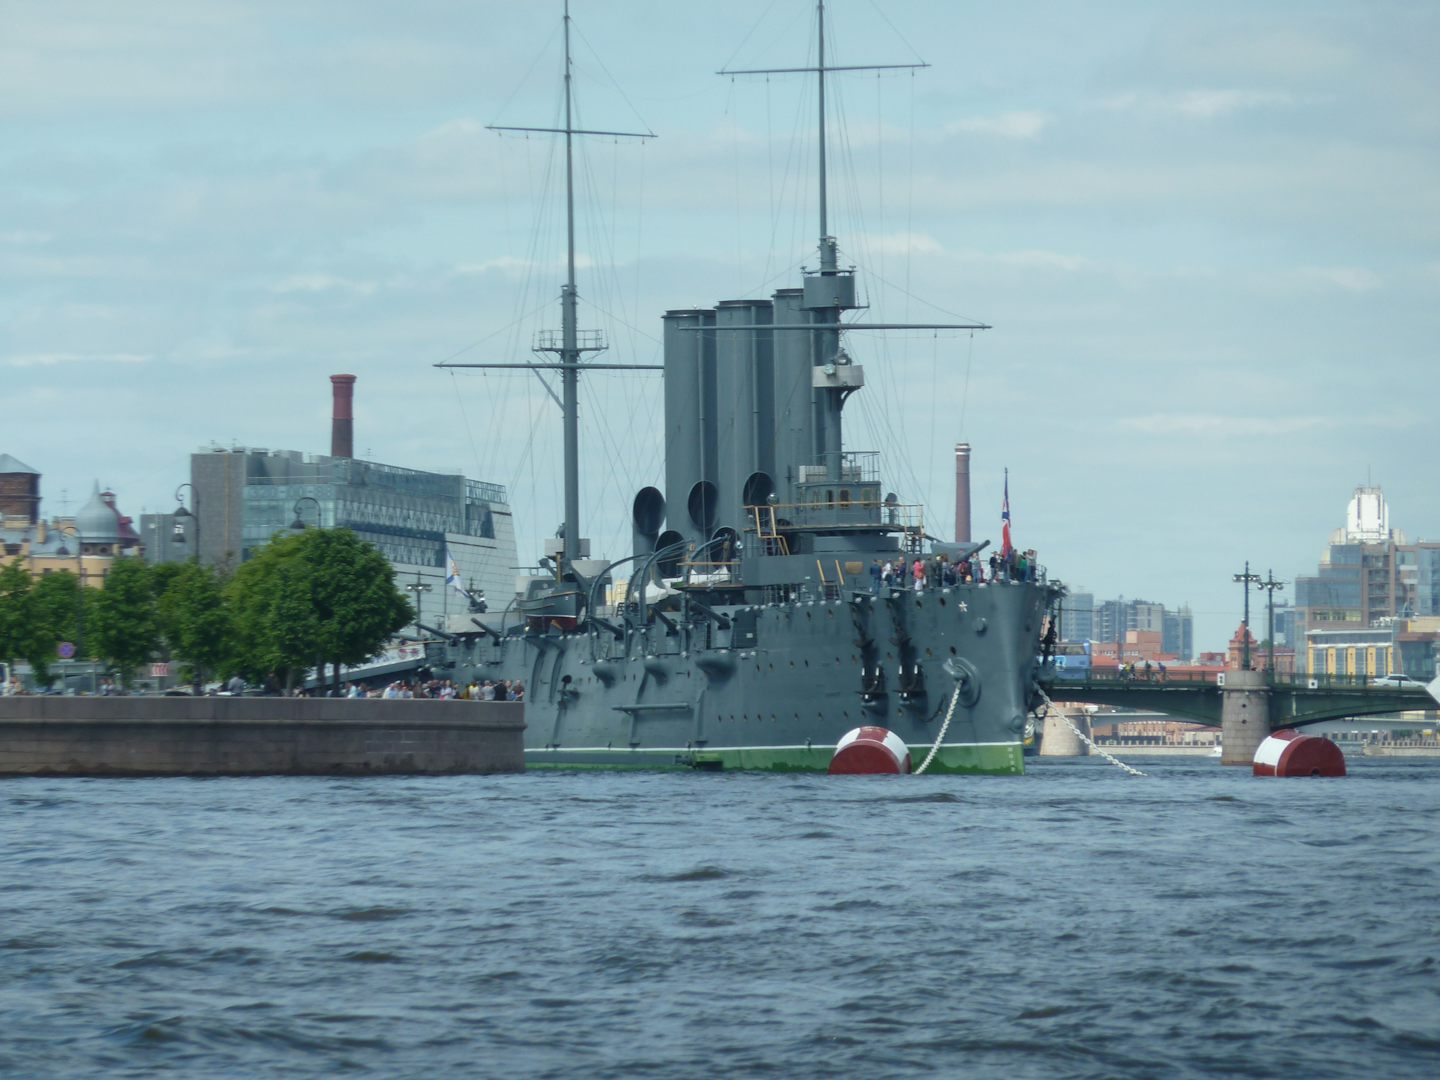 Battleship Potemkin  in St Petersburg